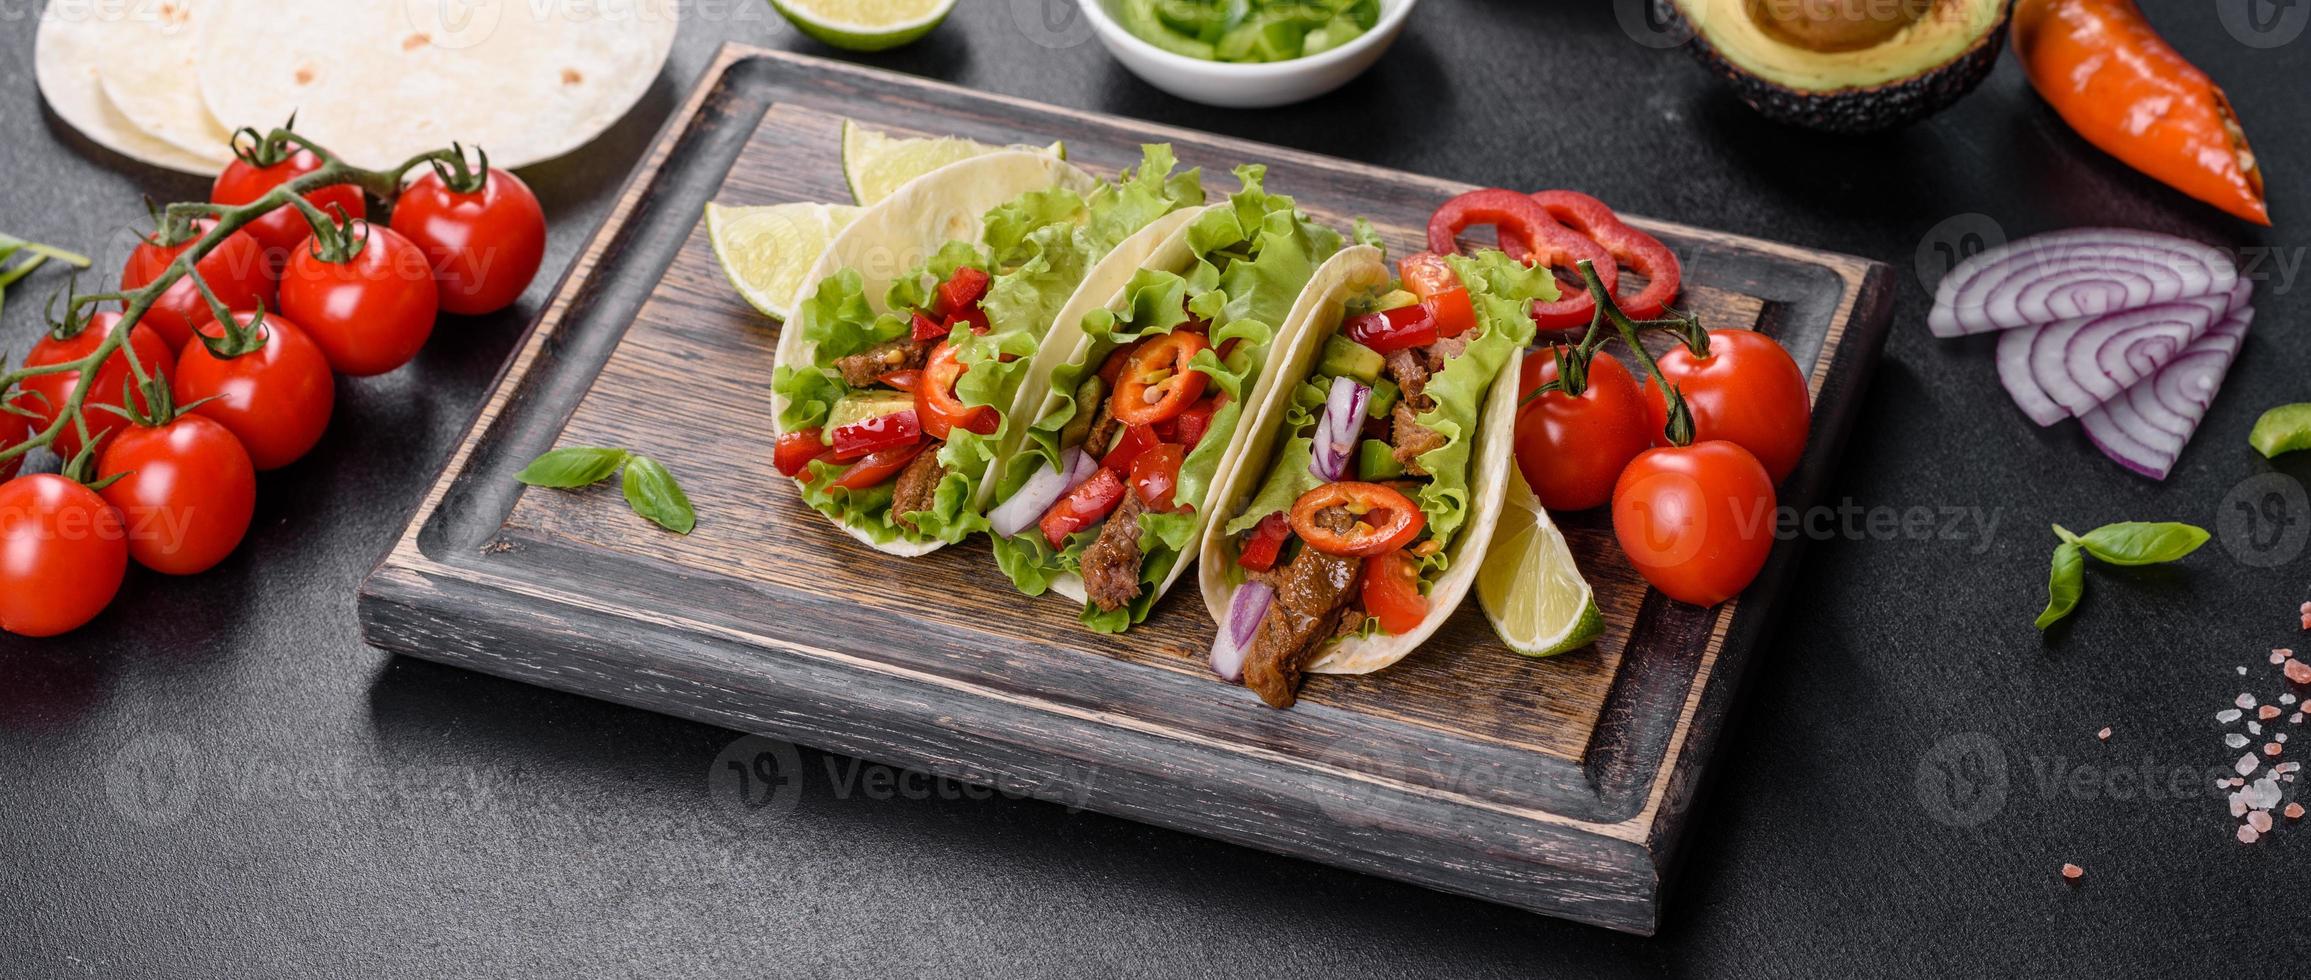 tacos mexicains avec boeuf, tomates, avocat, oignon et sauce salsa photo